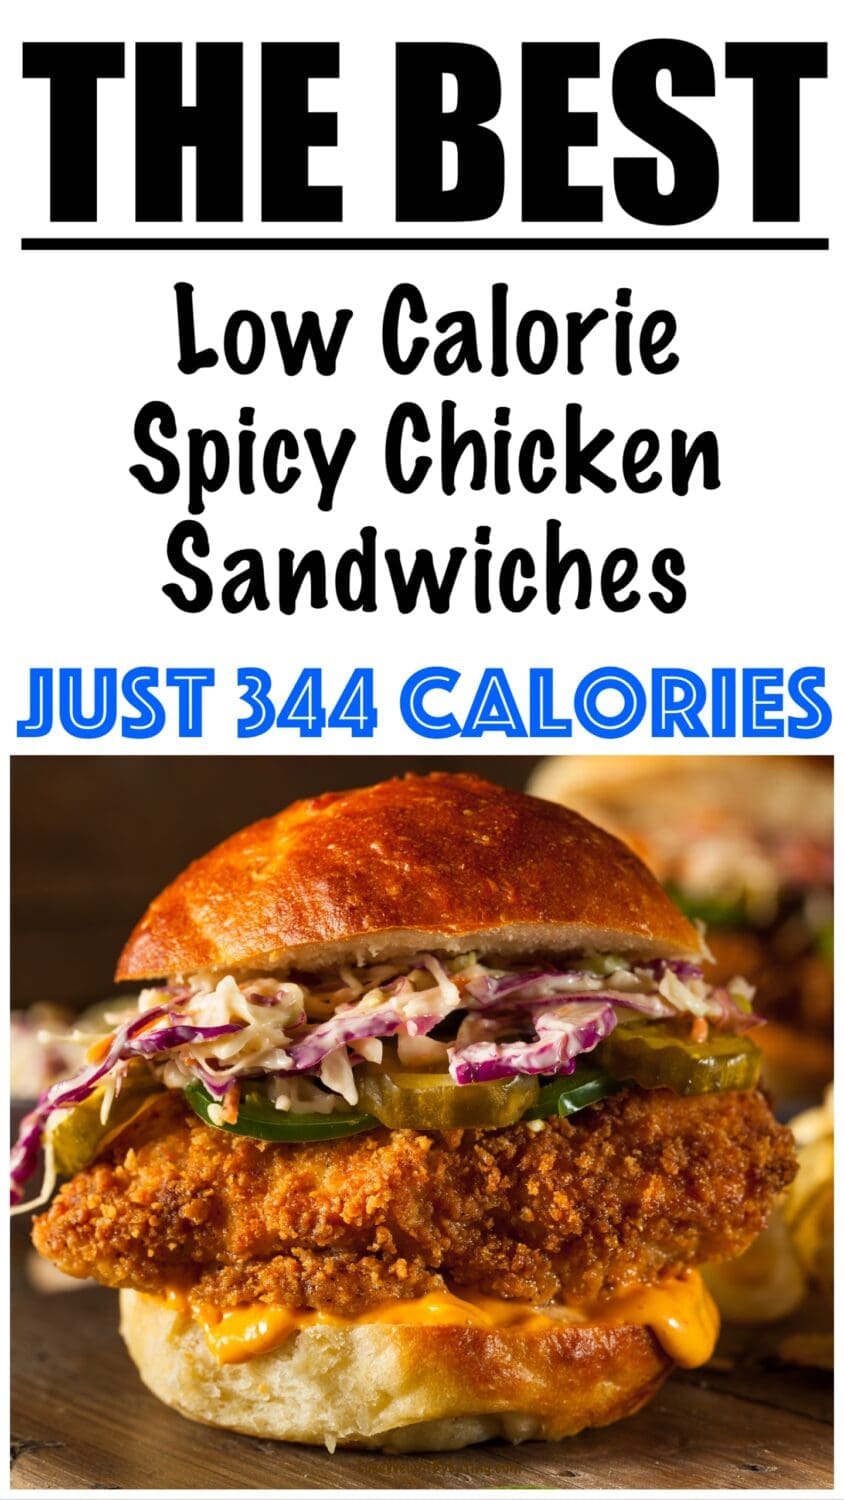 Low Calorie Spicy Chicken Sandwiches